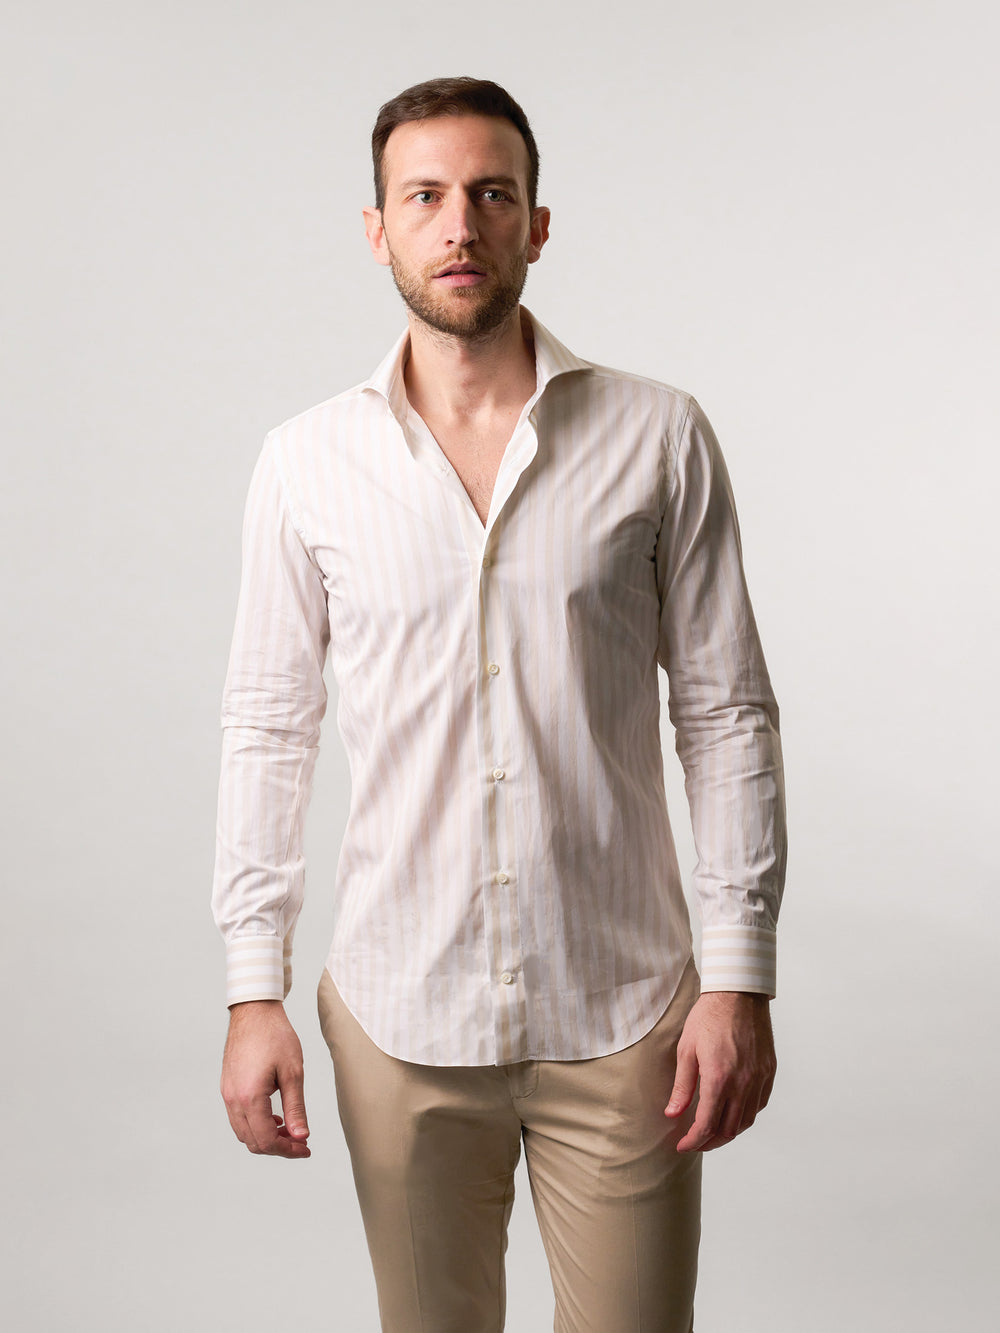 Casual Striped White/Light Beige Shirt